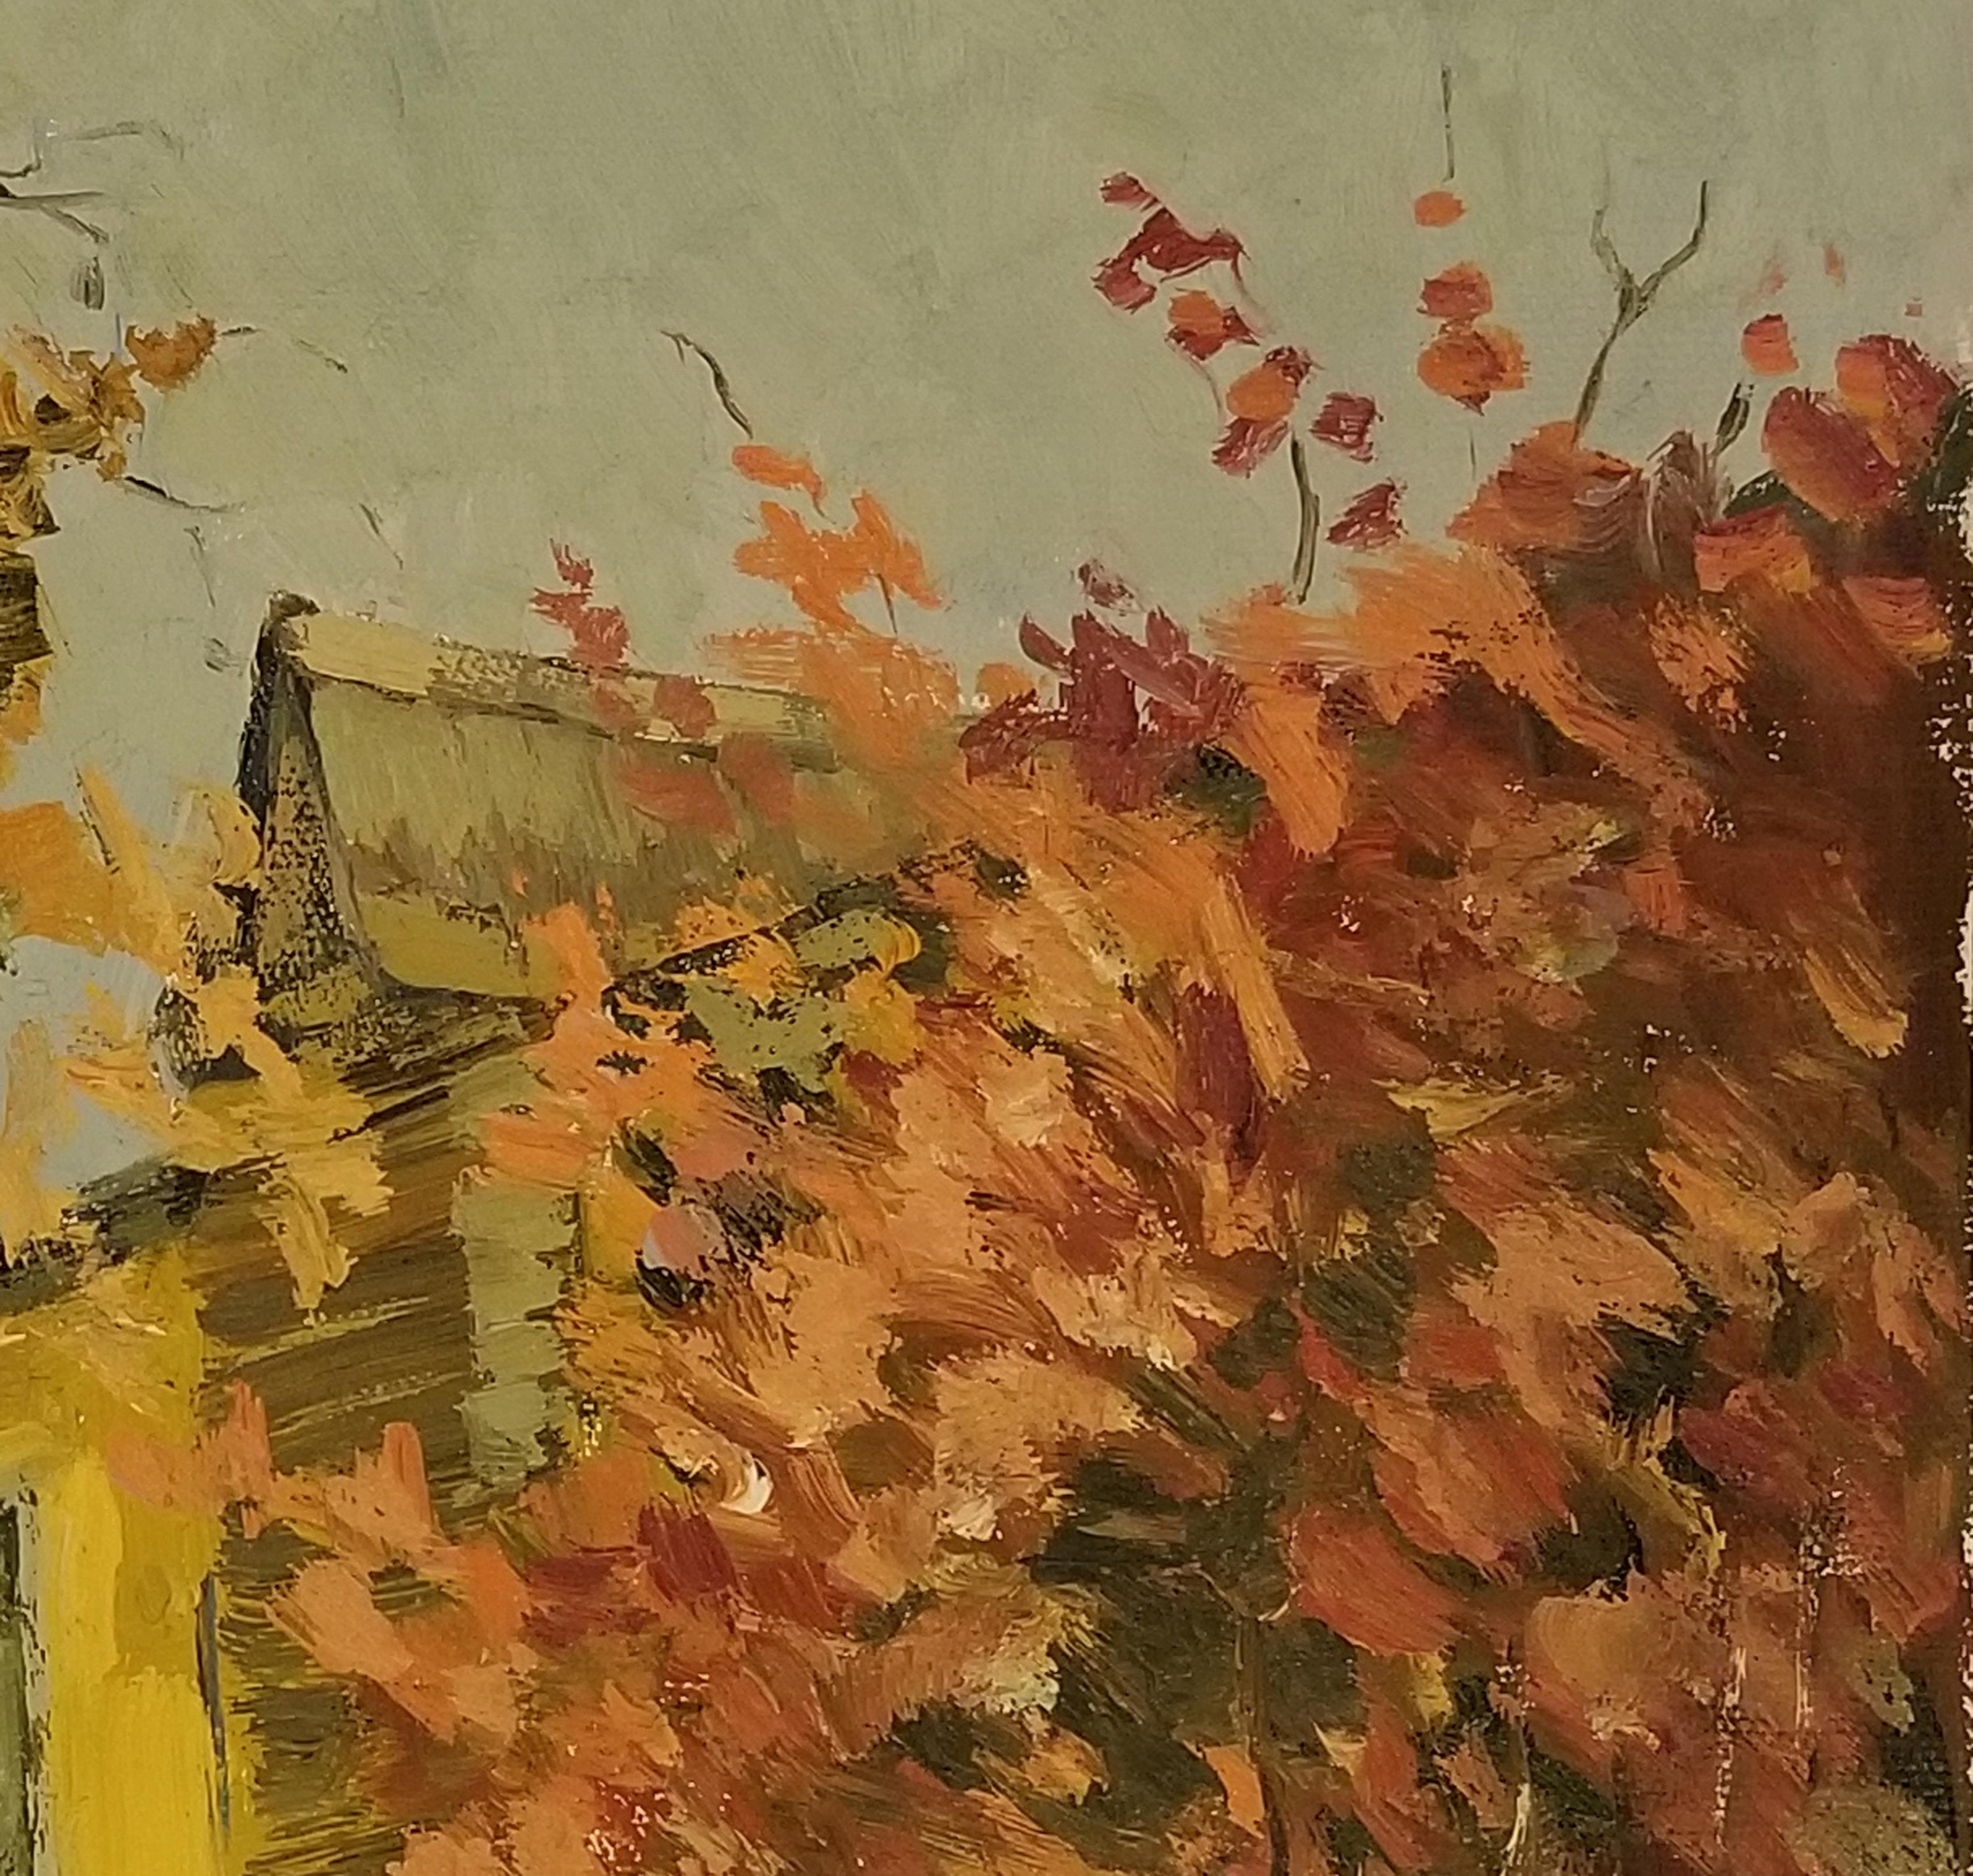 Artist: Ara H. Hakobyan
Work: Original Oil Painting, Handmade Artwork, One of a Kind
Medium: Oil on Canvas
Year: 2017
Style: Impressionism
Title: Autumn in the Yard
Size: 18